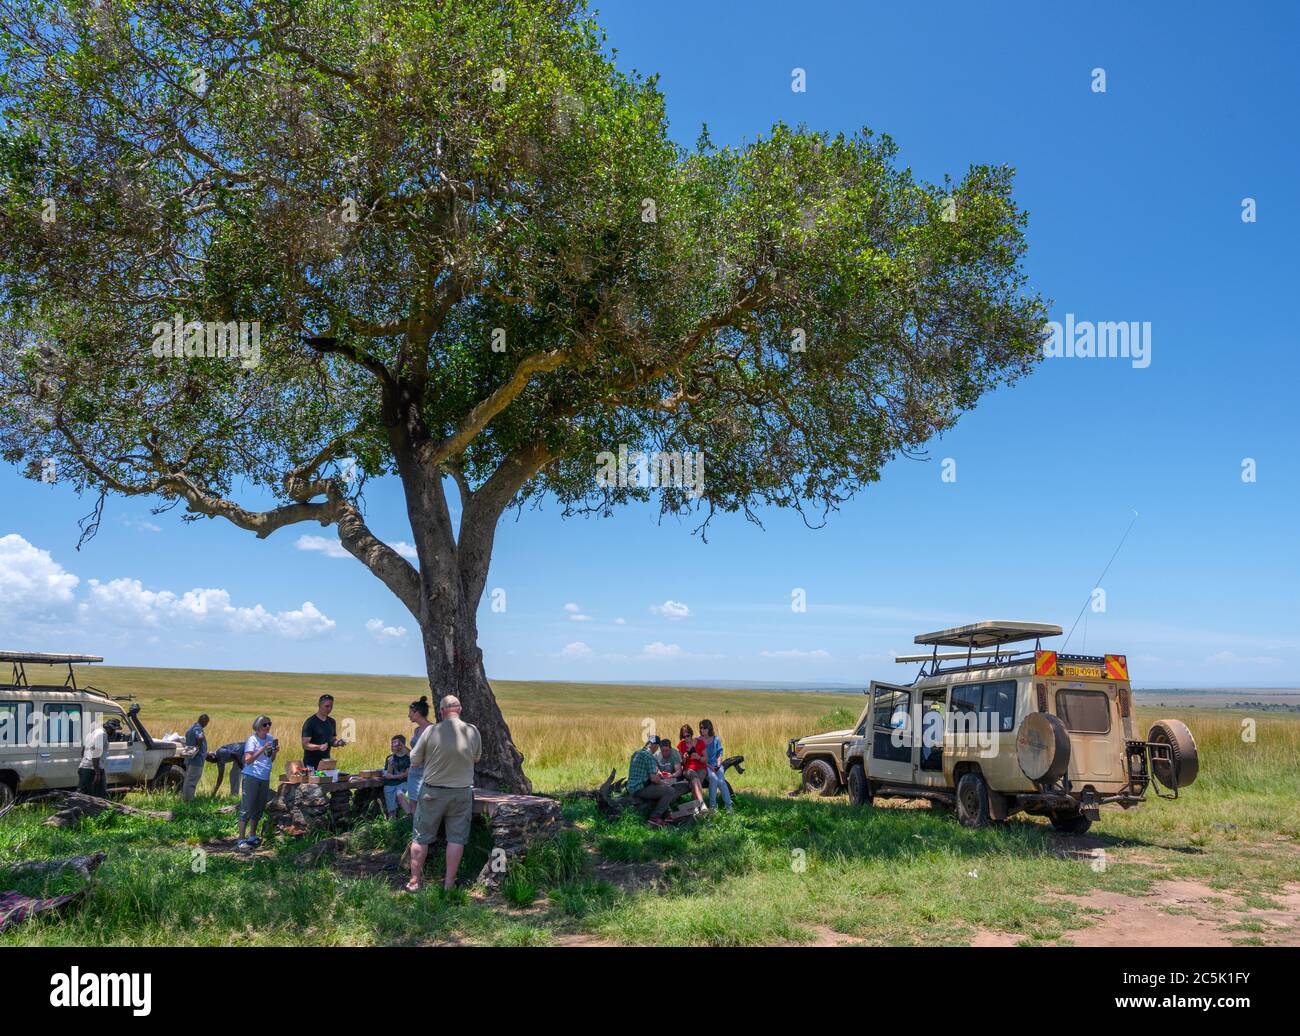 Safari vehicles under a tree with people having a picnic lunch, Mara Triangle, Masai Mara National Reserve, Kenya, Africa Stock Photo